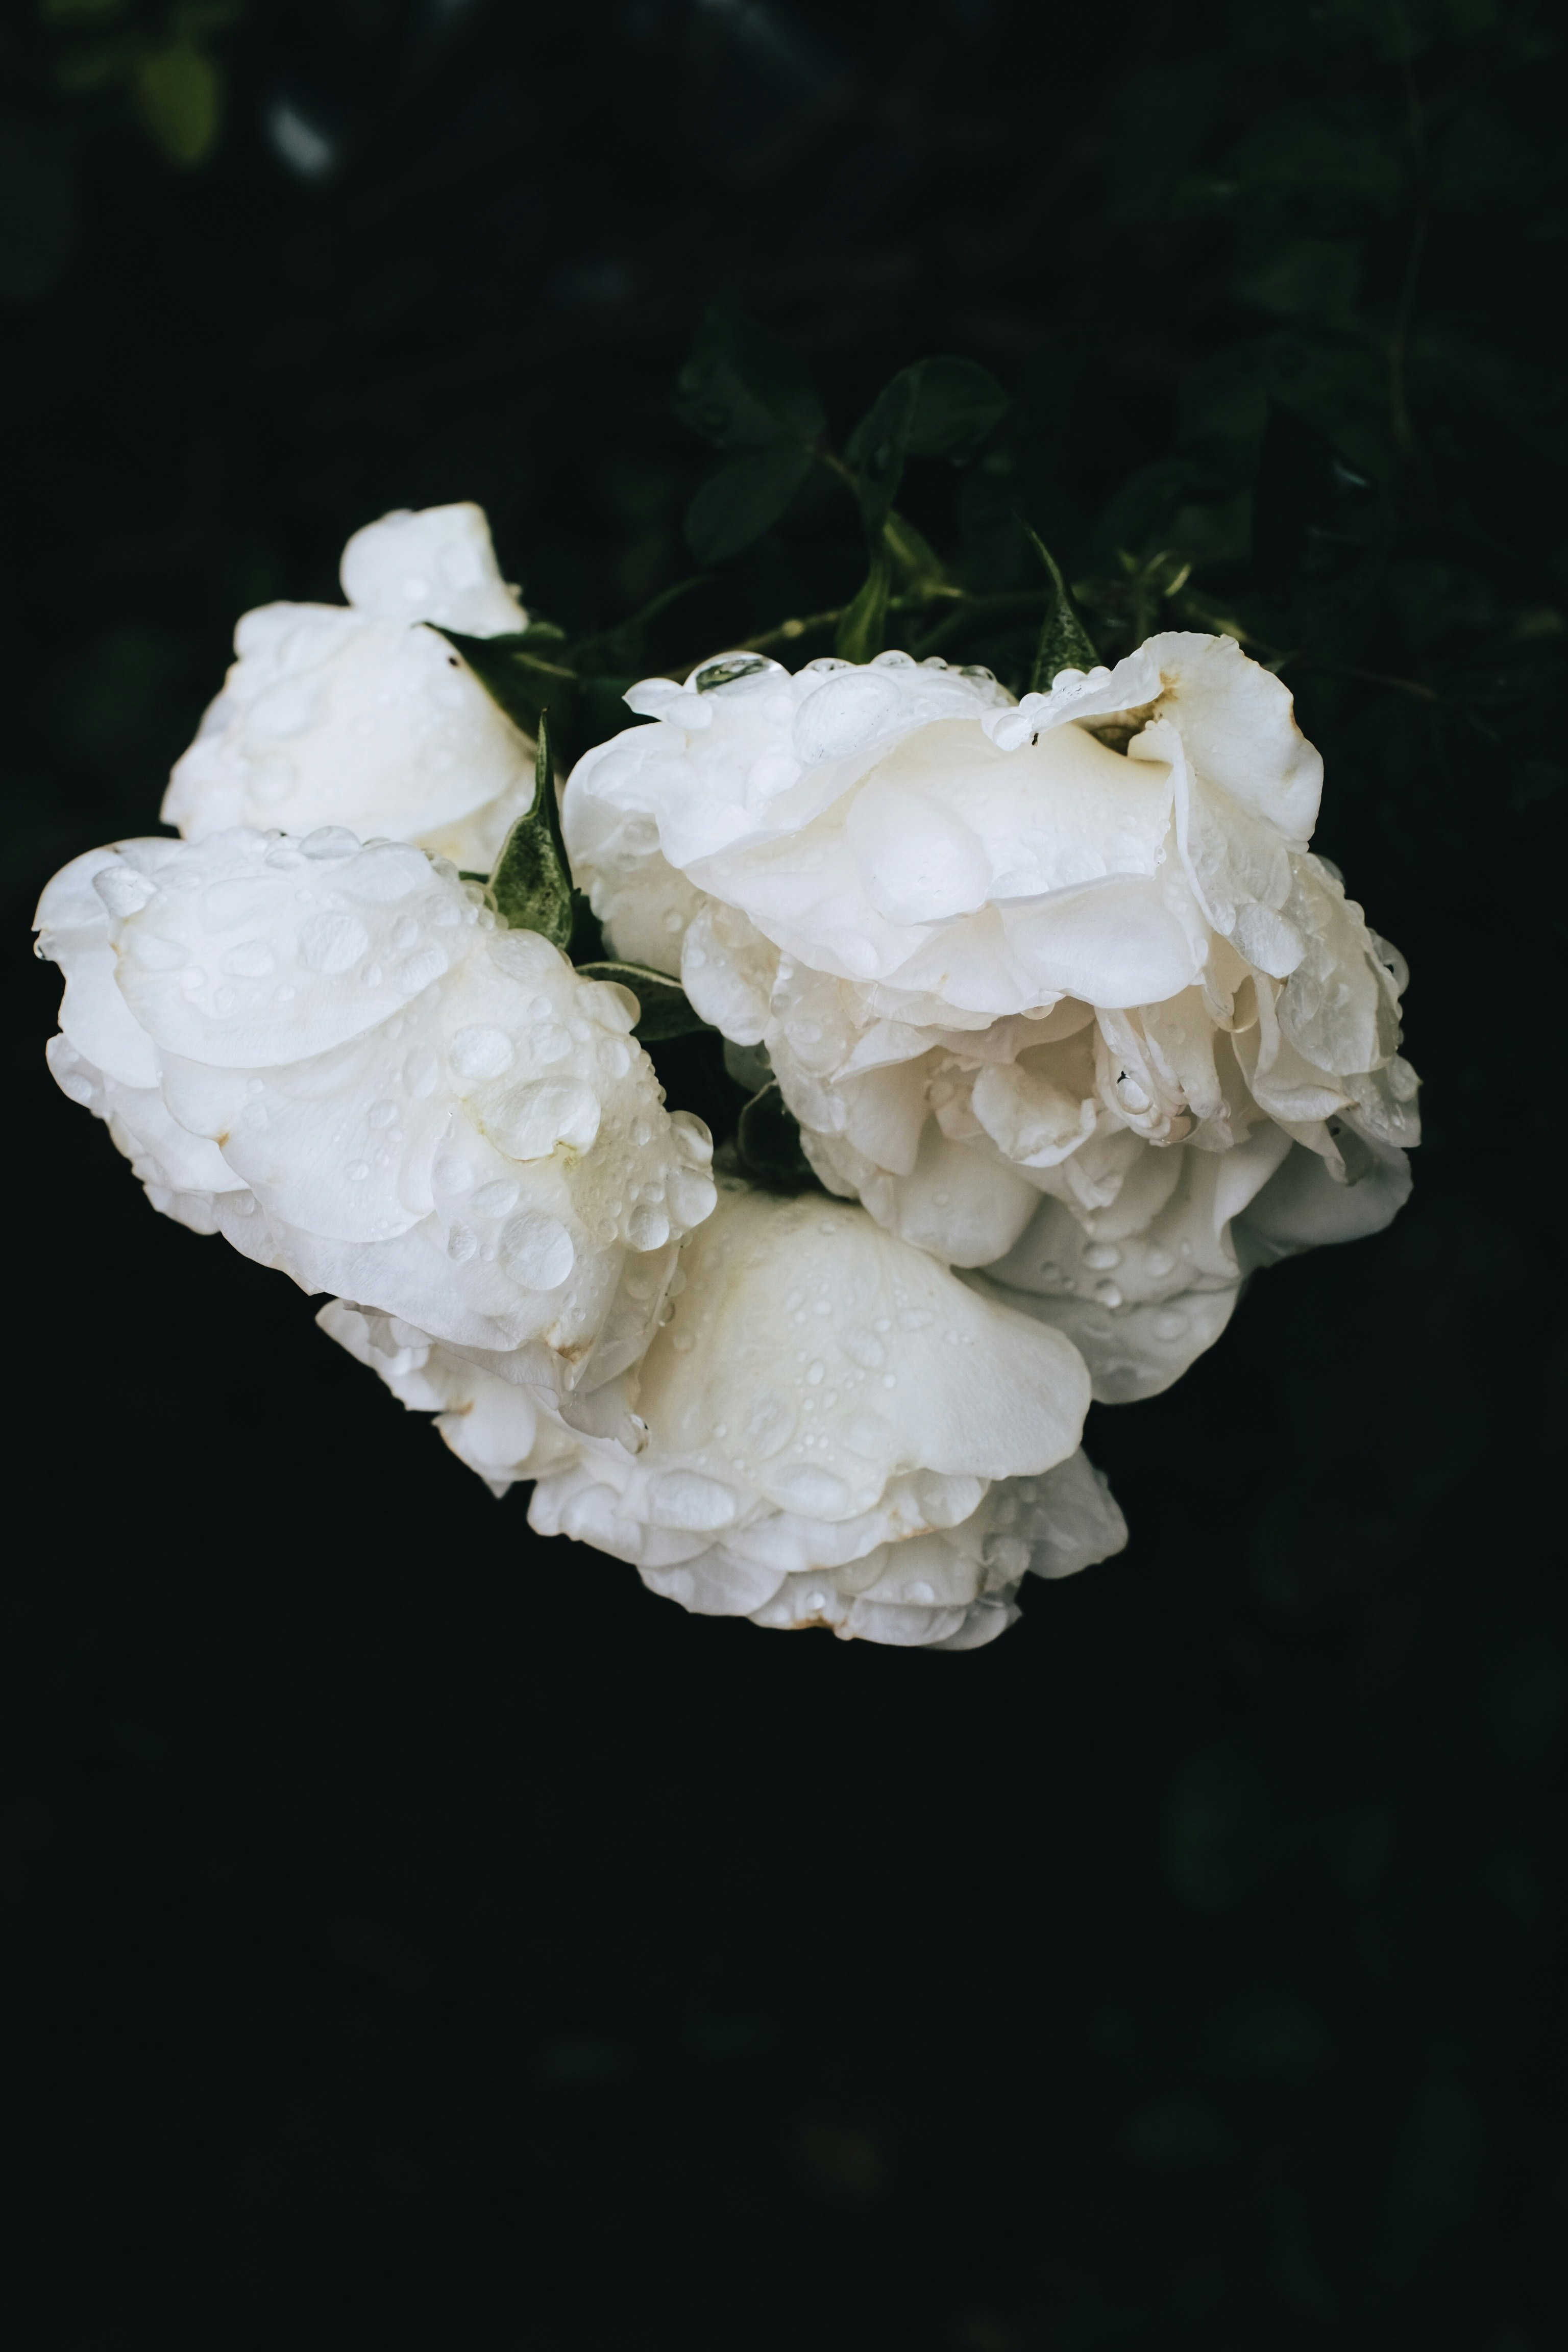 white roses in black background